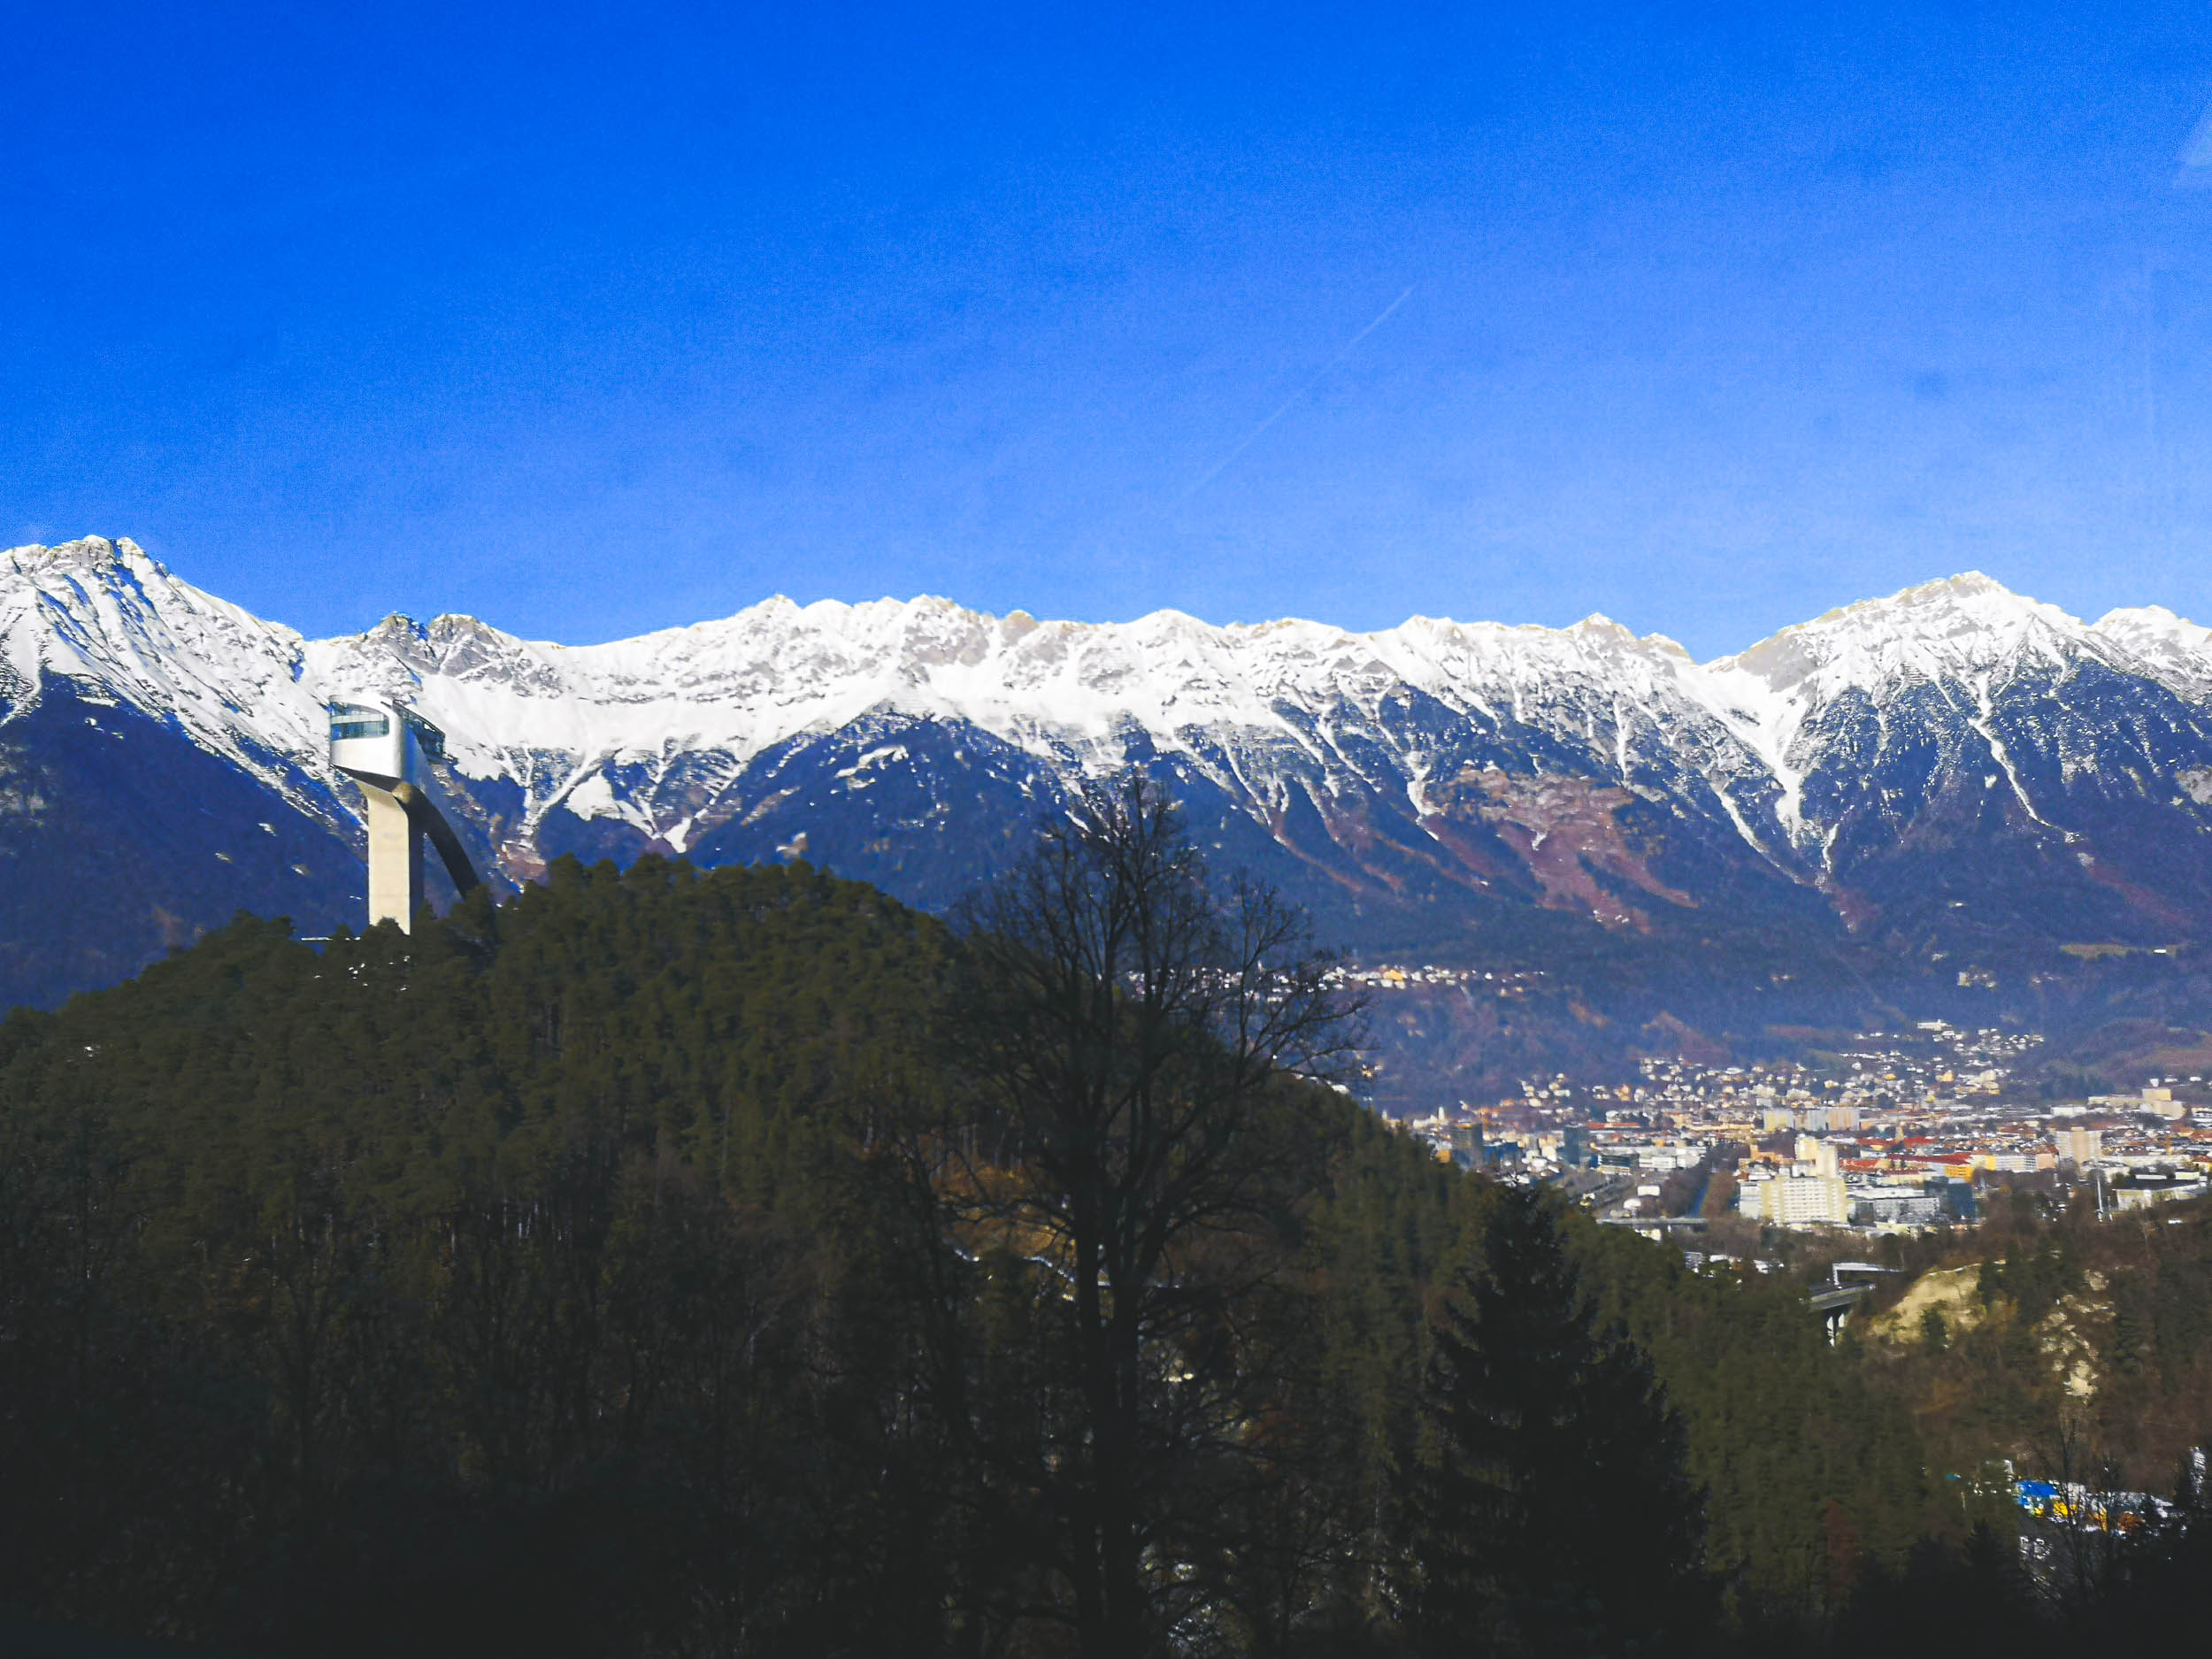 Olympic Bergel Ski jump in Innsbruck, AUstria